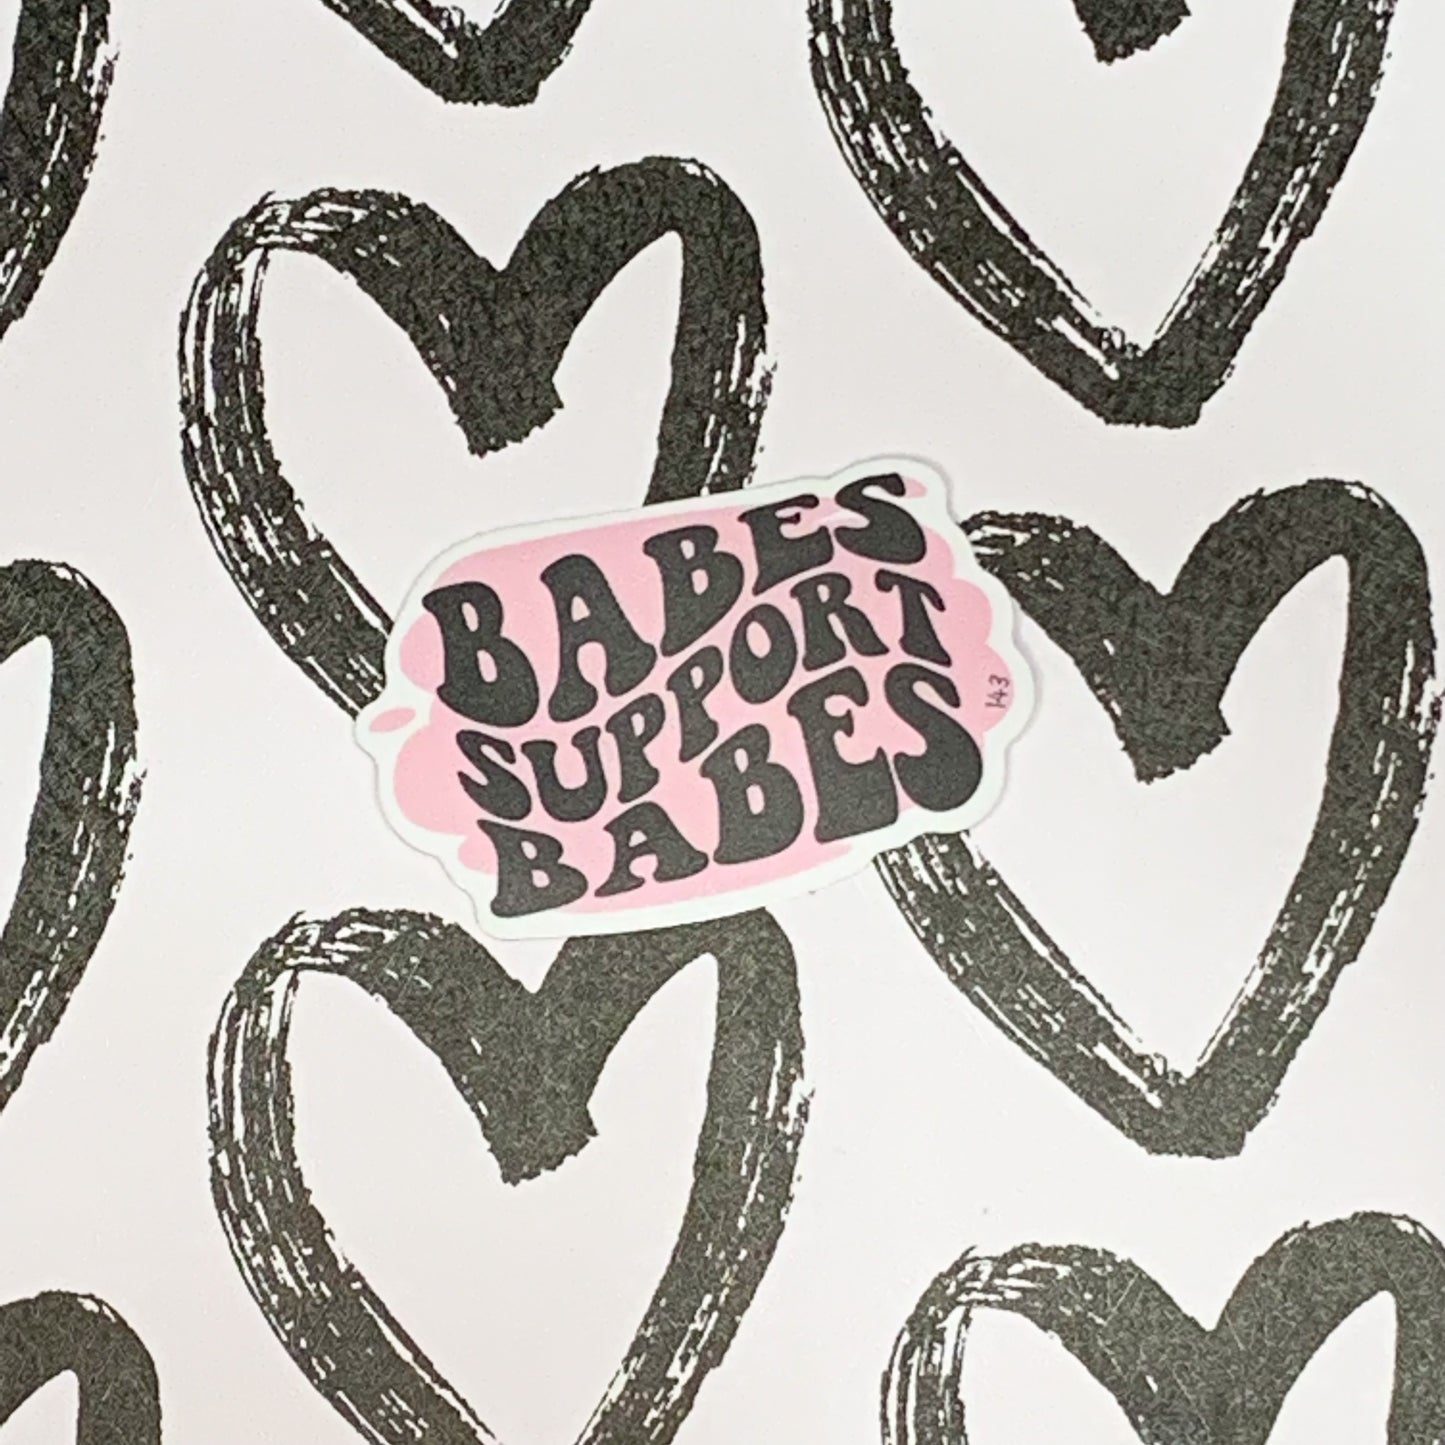 Babes Support Babes - Affirmation Sticker